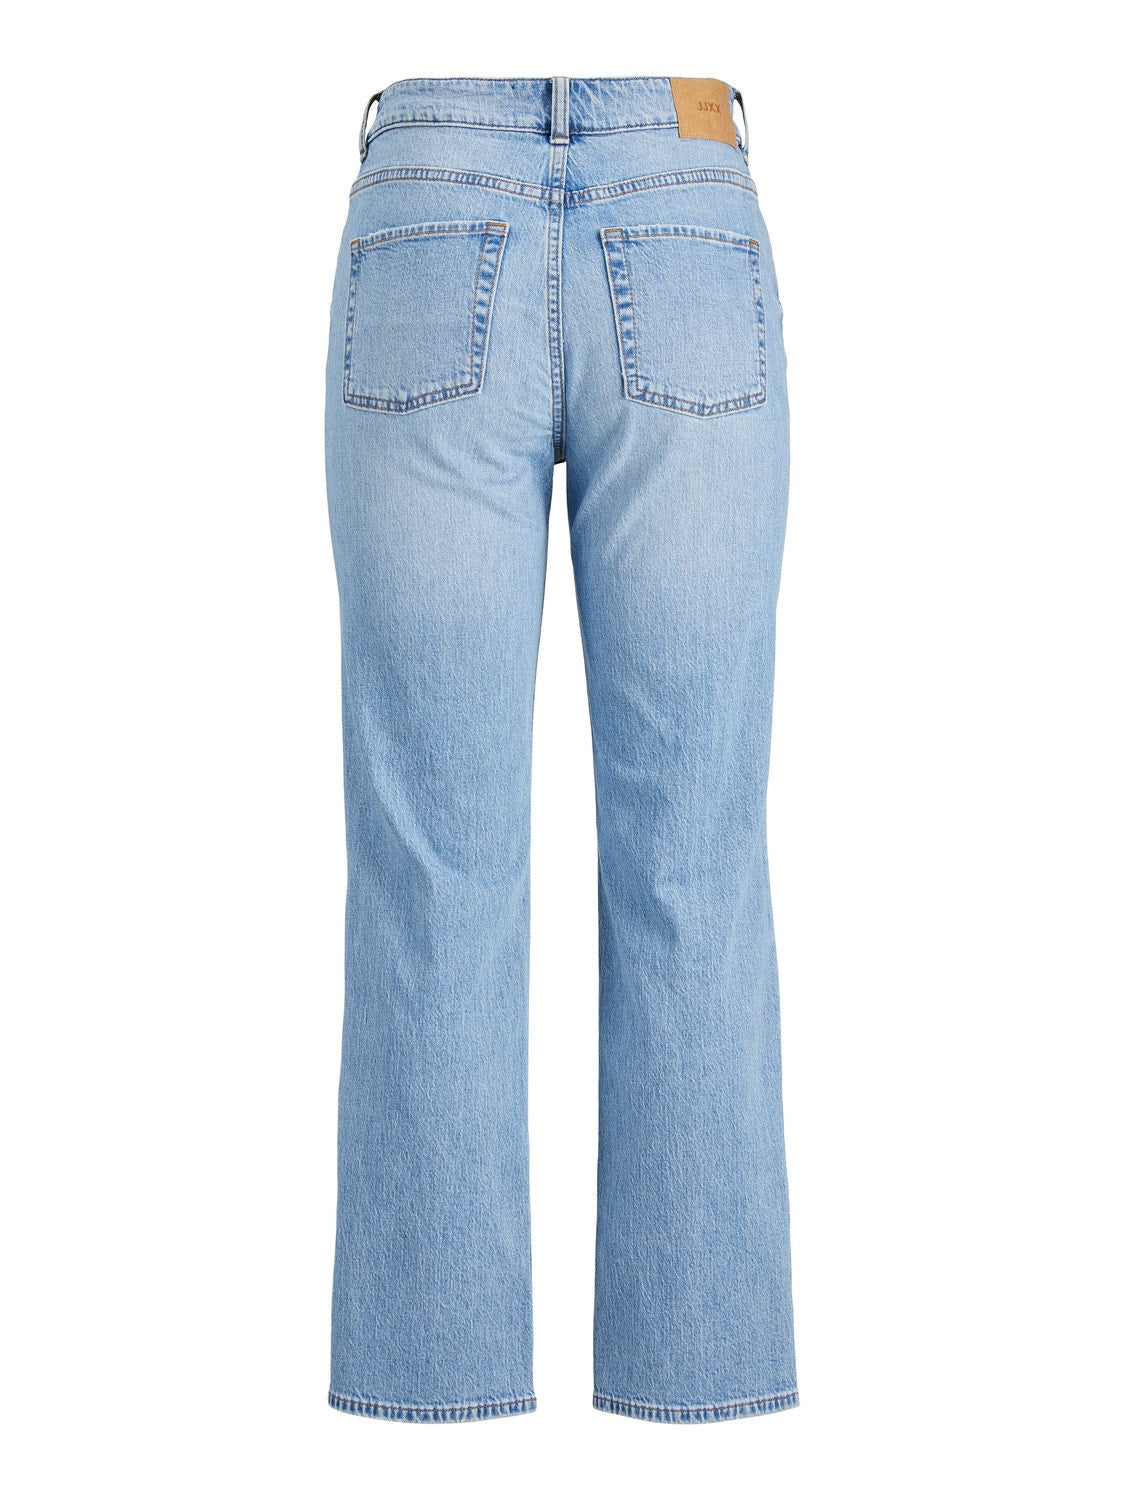 jeans-femme-slim-straight-mid-waist-nice-jjxx-12246133-DM2-SHOP-04